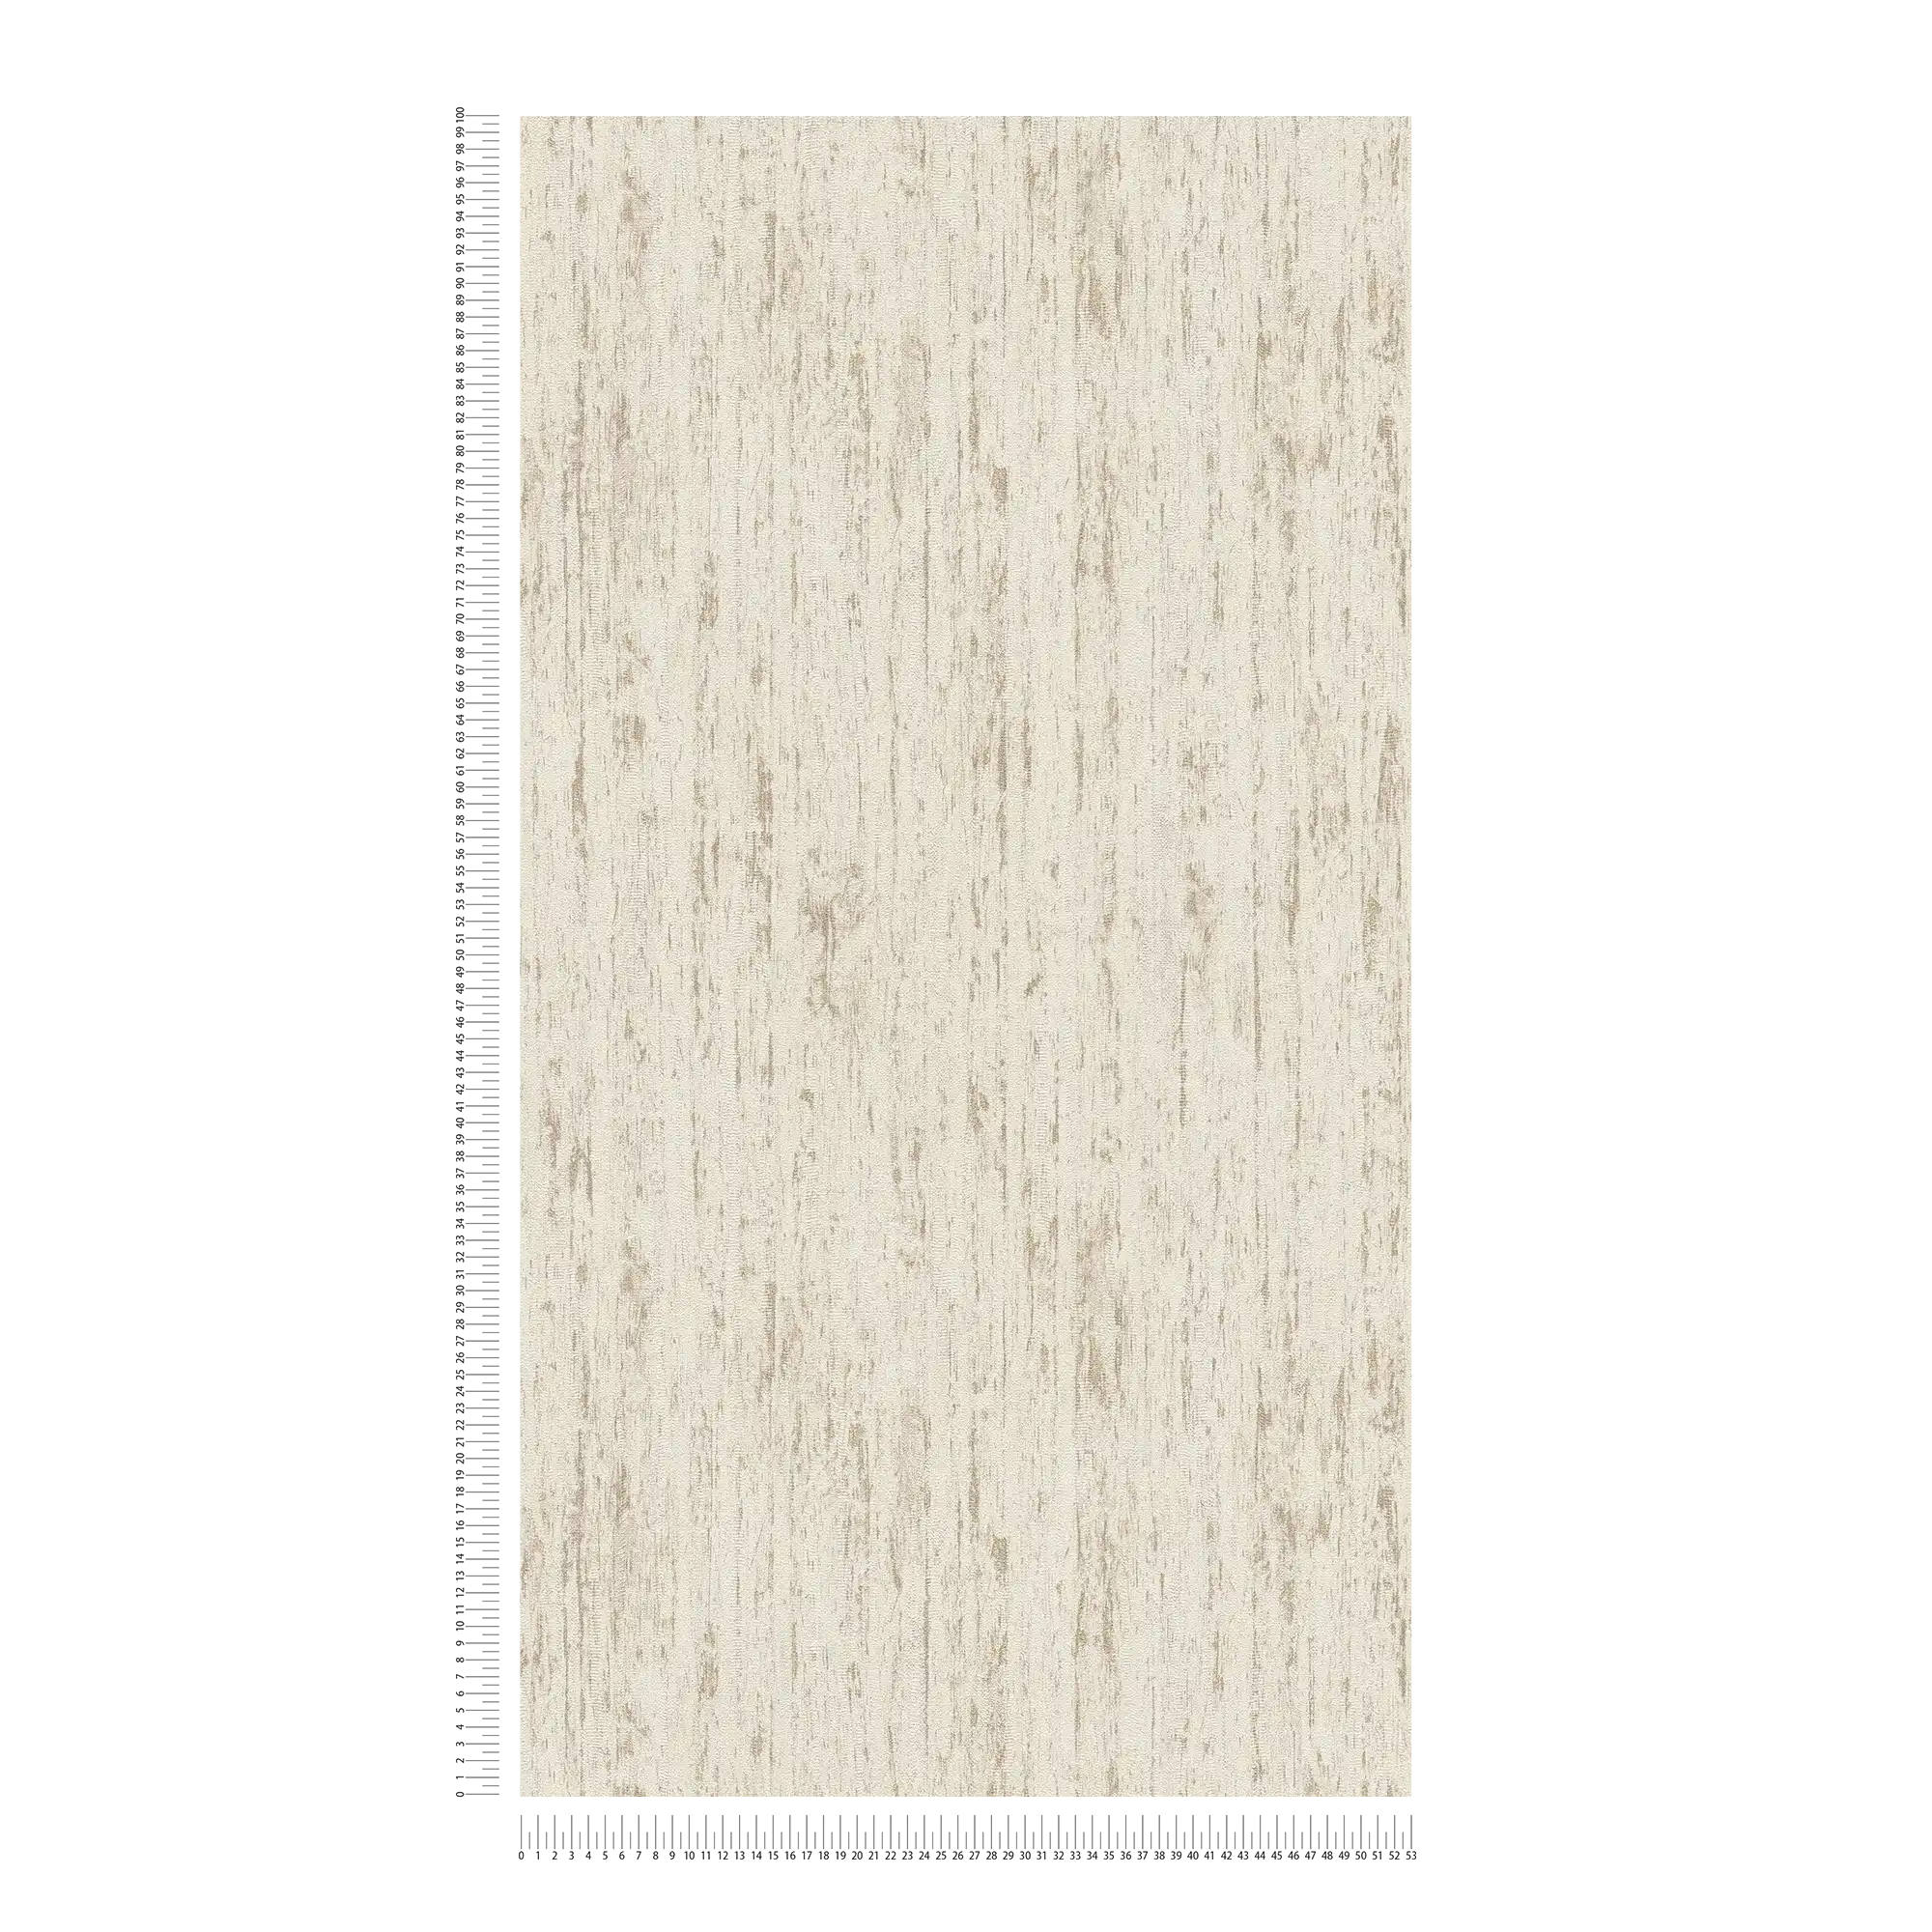             Wallpaper with wavy line pattern - white, beige, gold
        